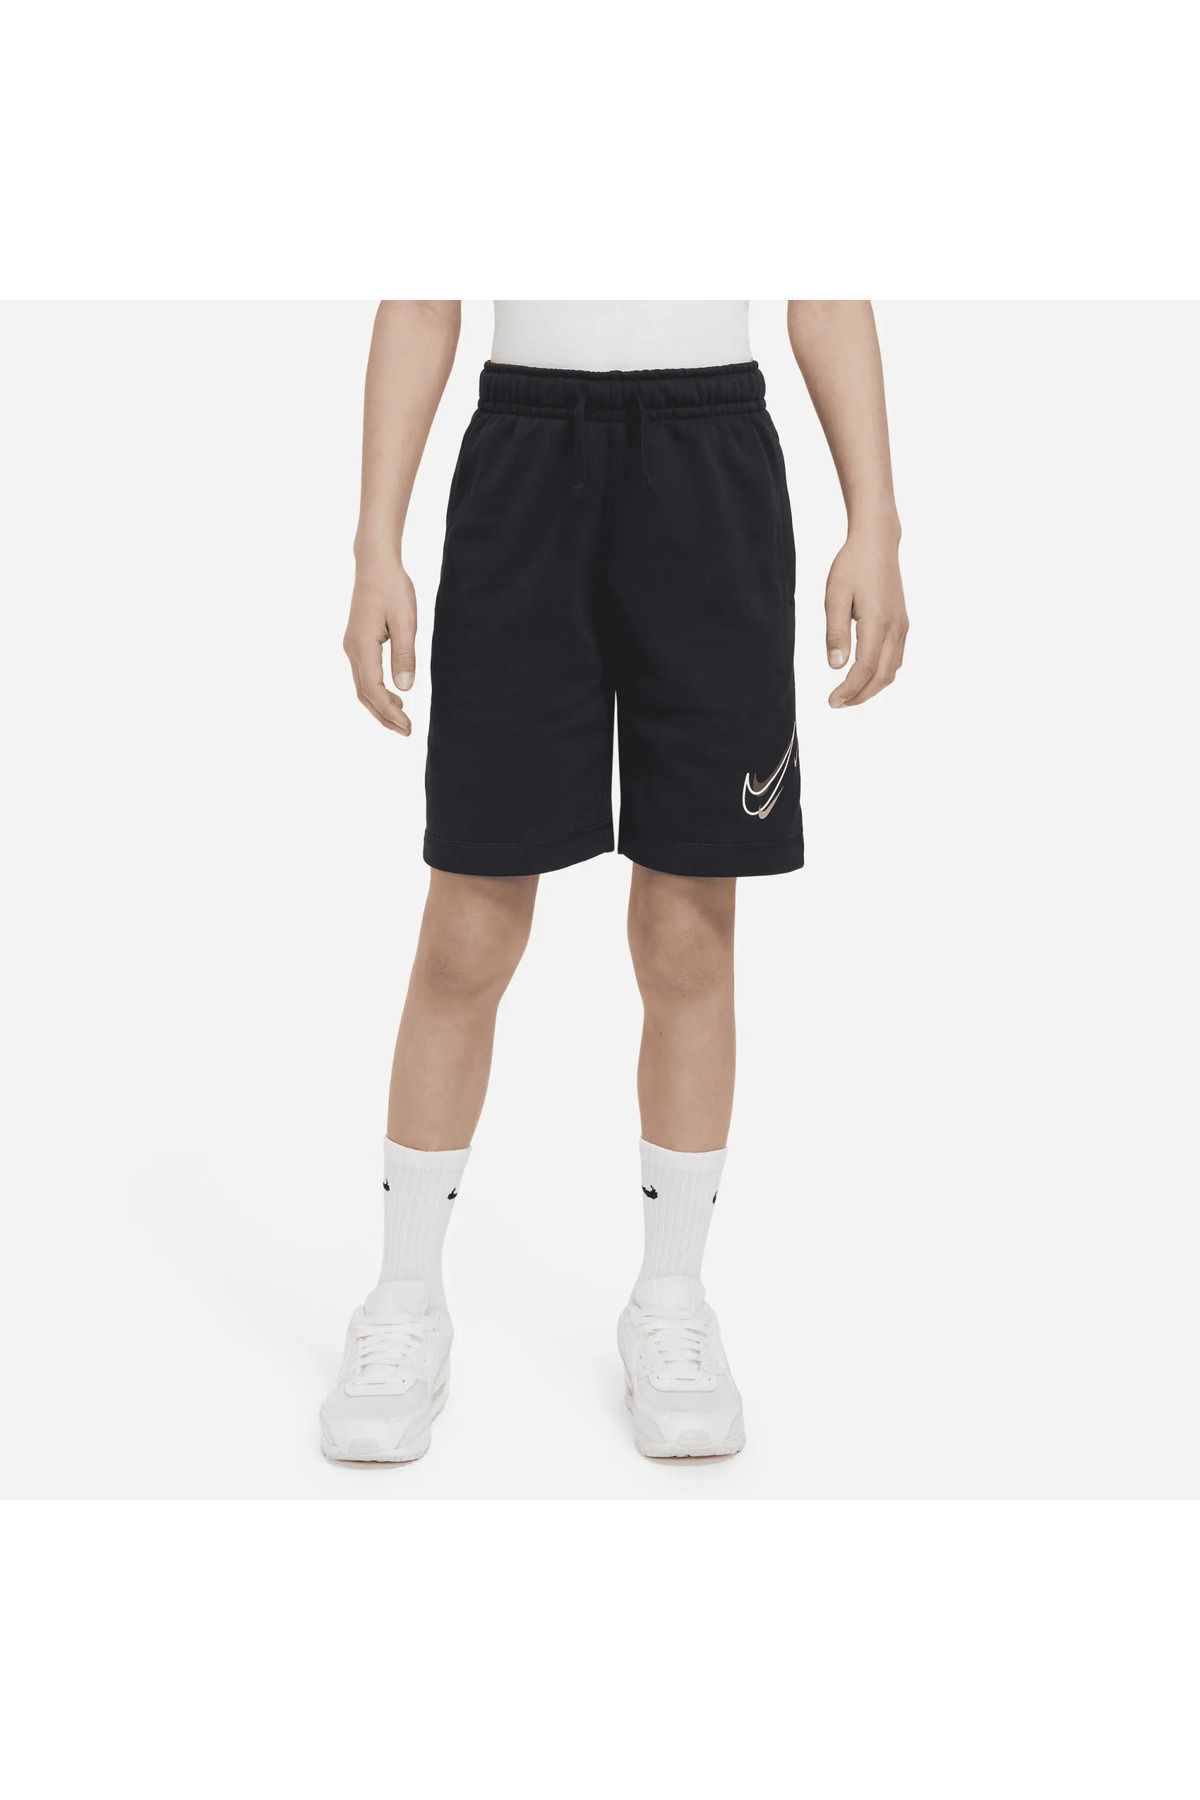 Nike sportswear erkek çocuk siyah pamuklu cepli şort dx2298